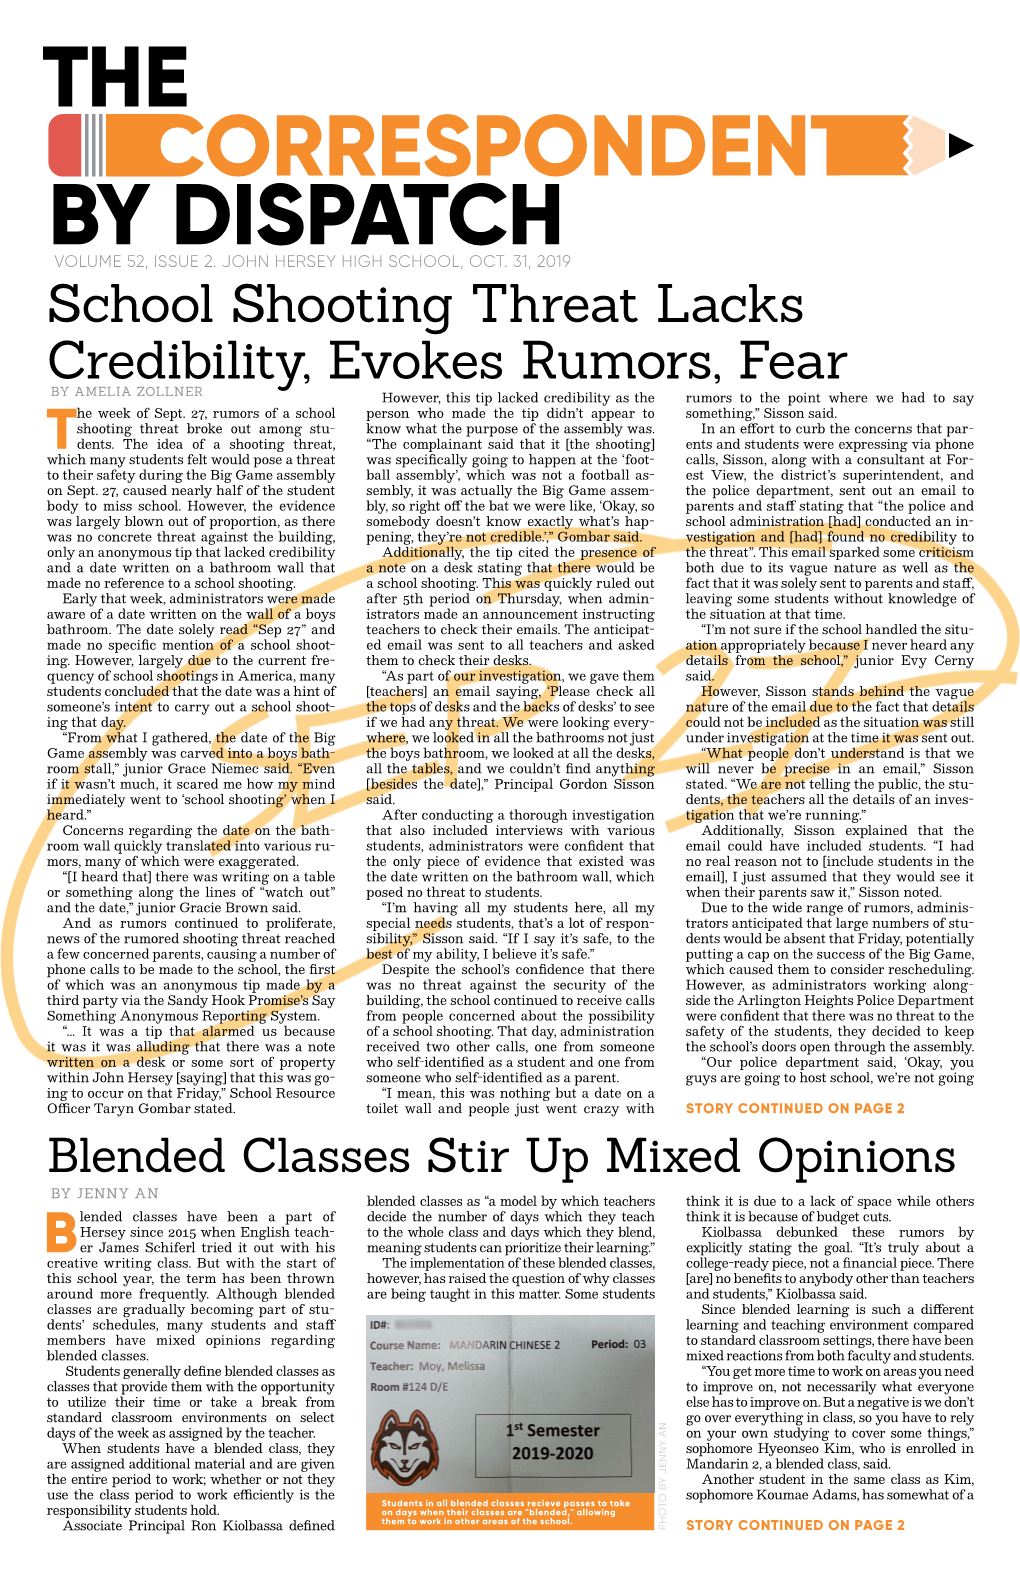 School Shooting Threat Lacks Credibility, Evokes Rumors, Fear